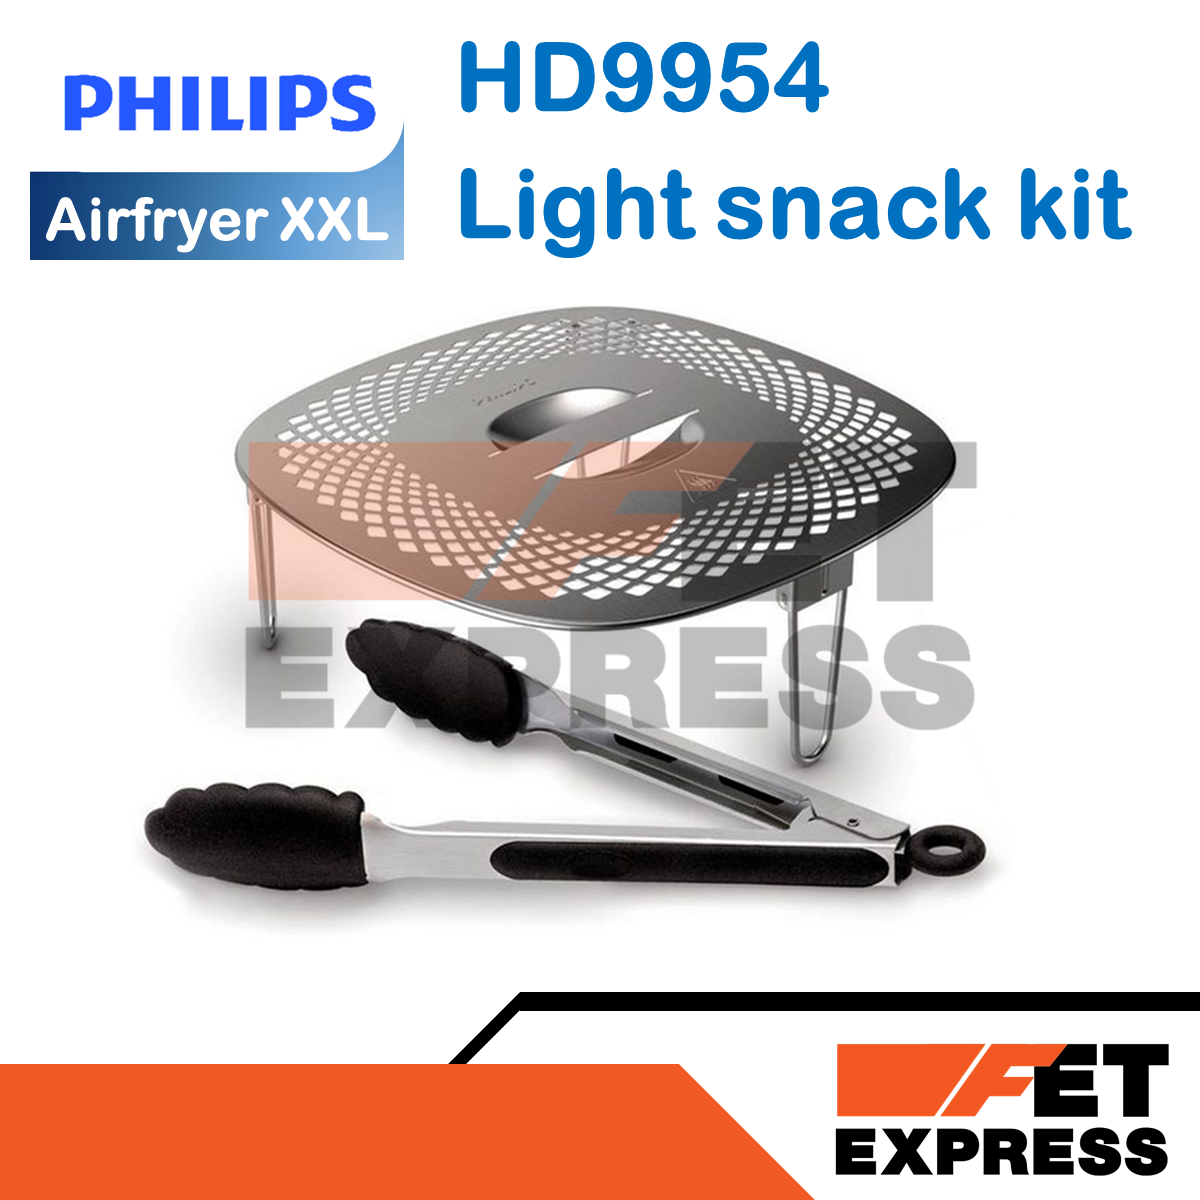 Airfryer XXL Light Snack Kit HD9954/01